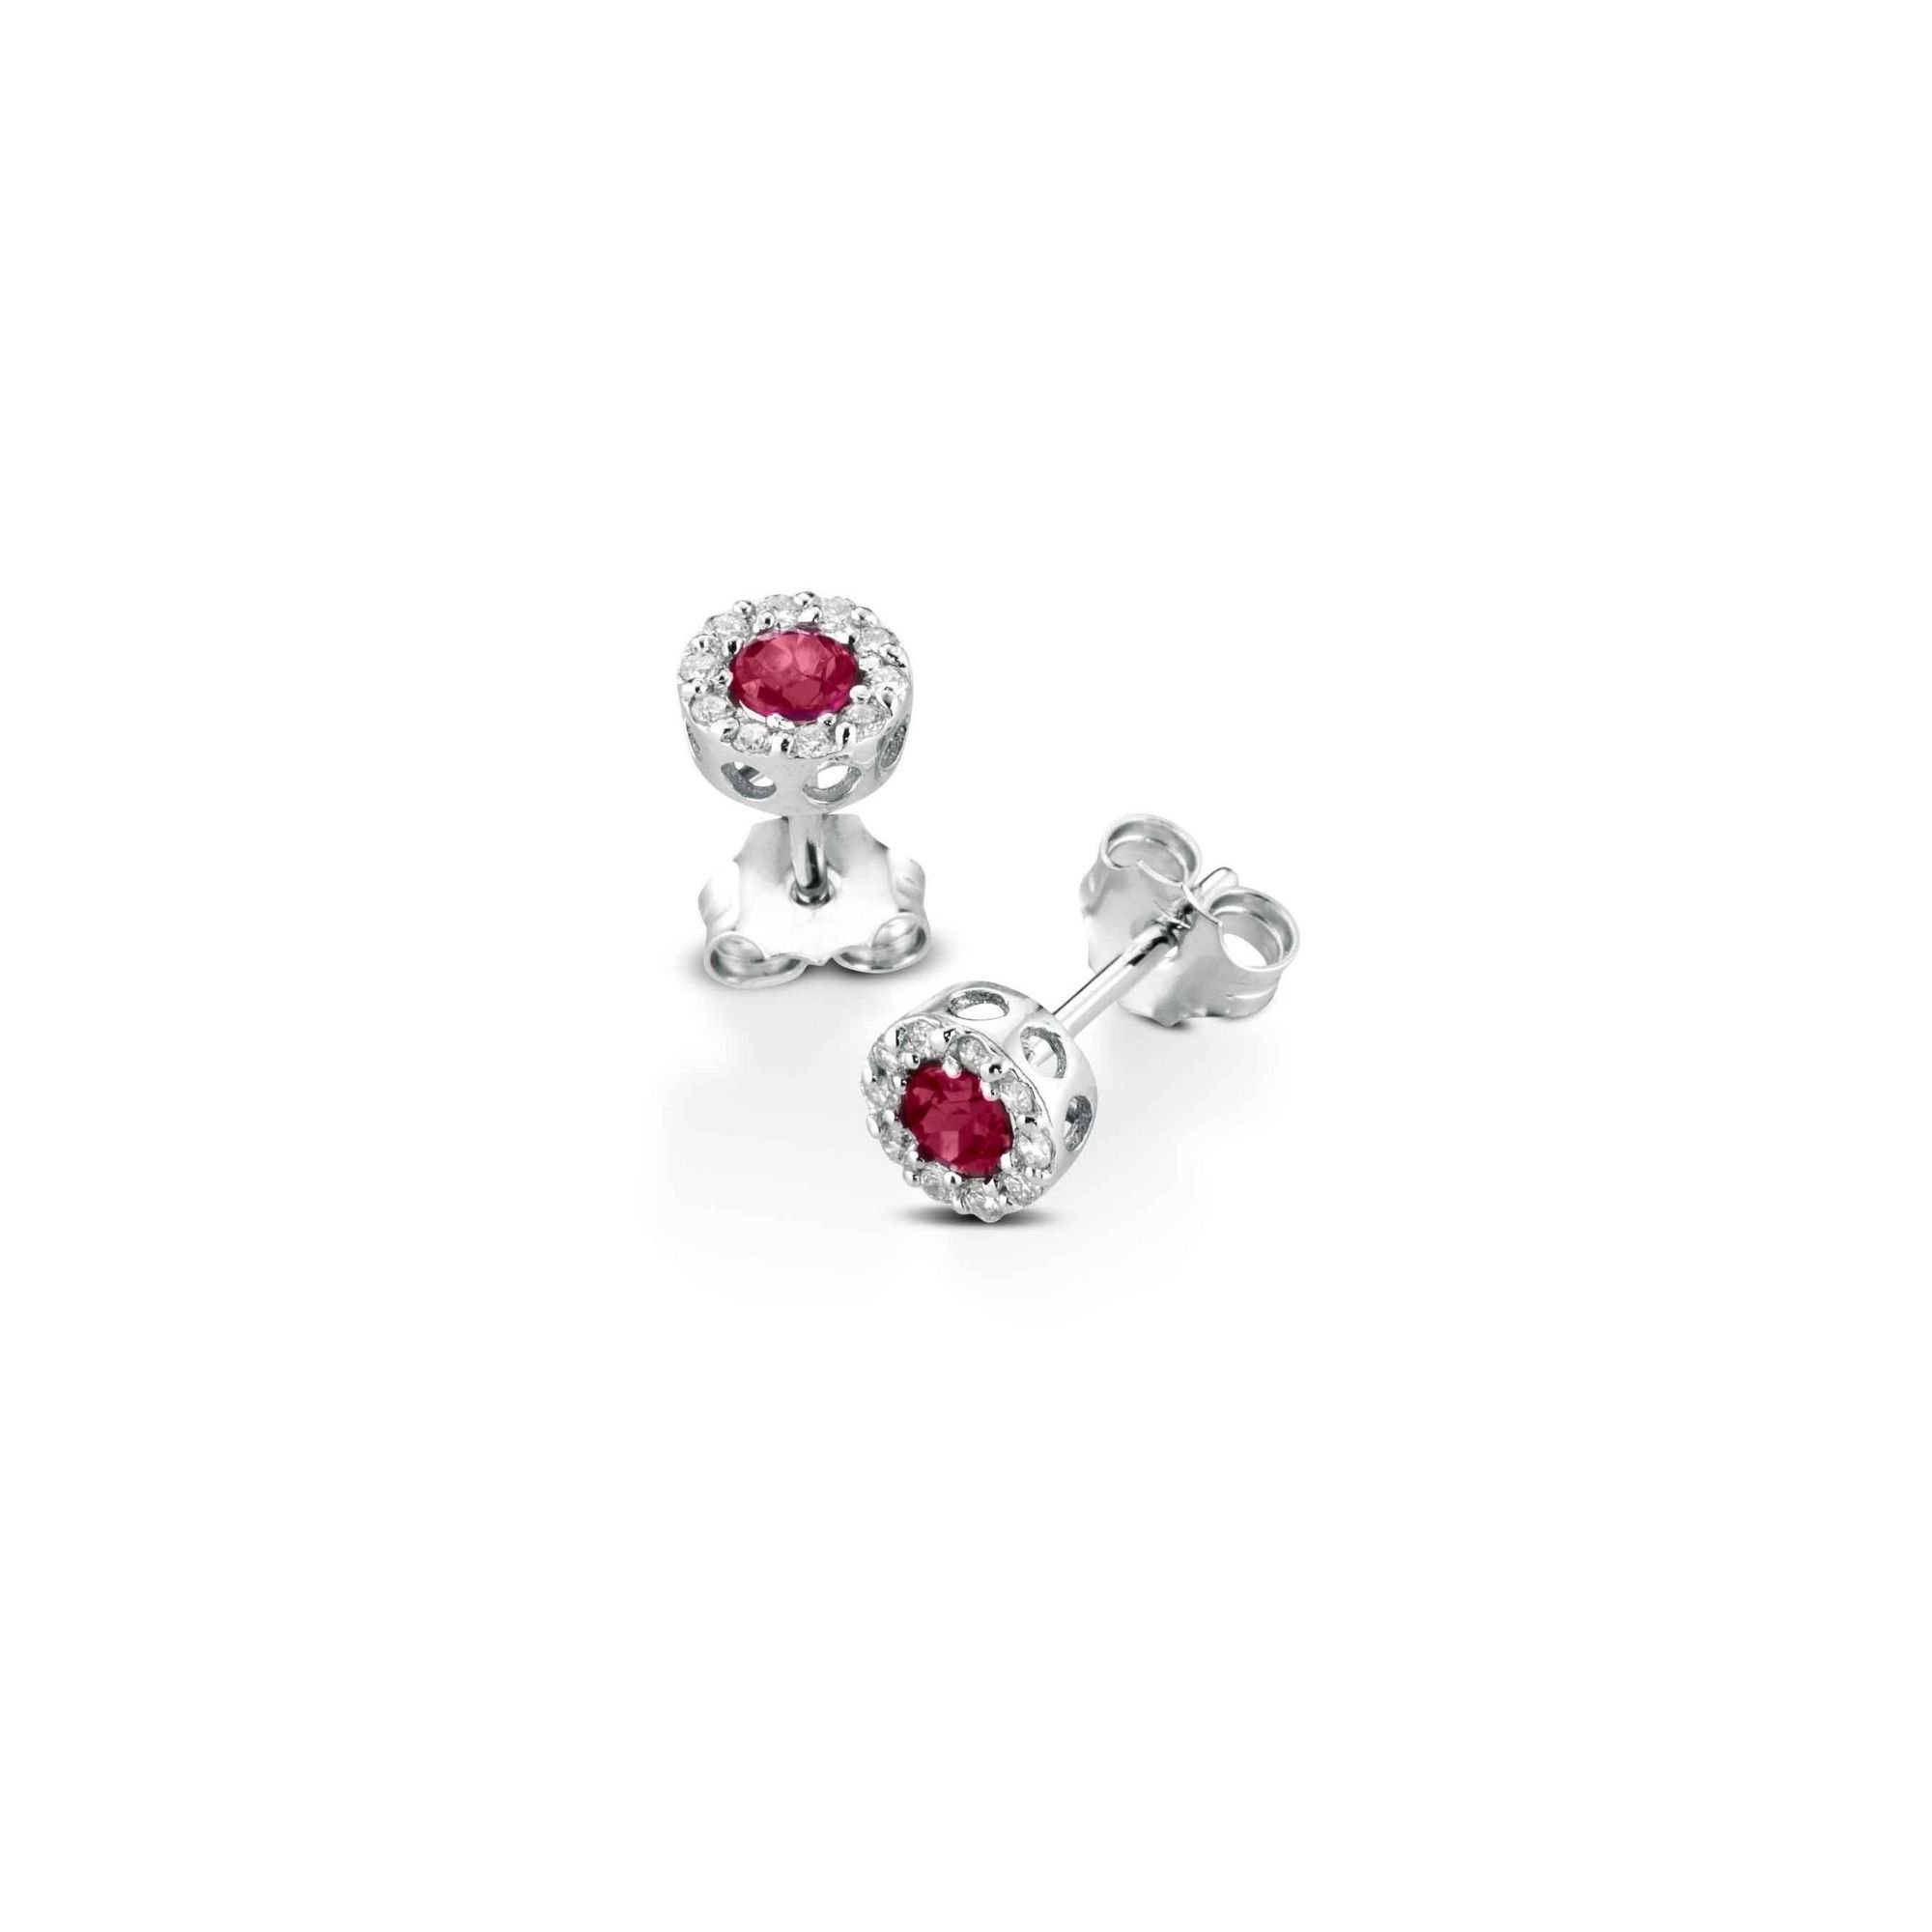 Orecchini al lobo con rubini e diamanti Lobe earrings with rubies and diamonds sconto discount